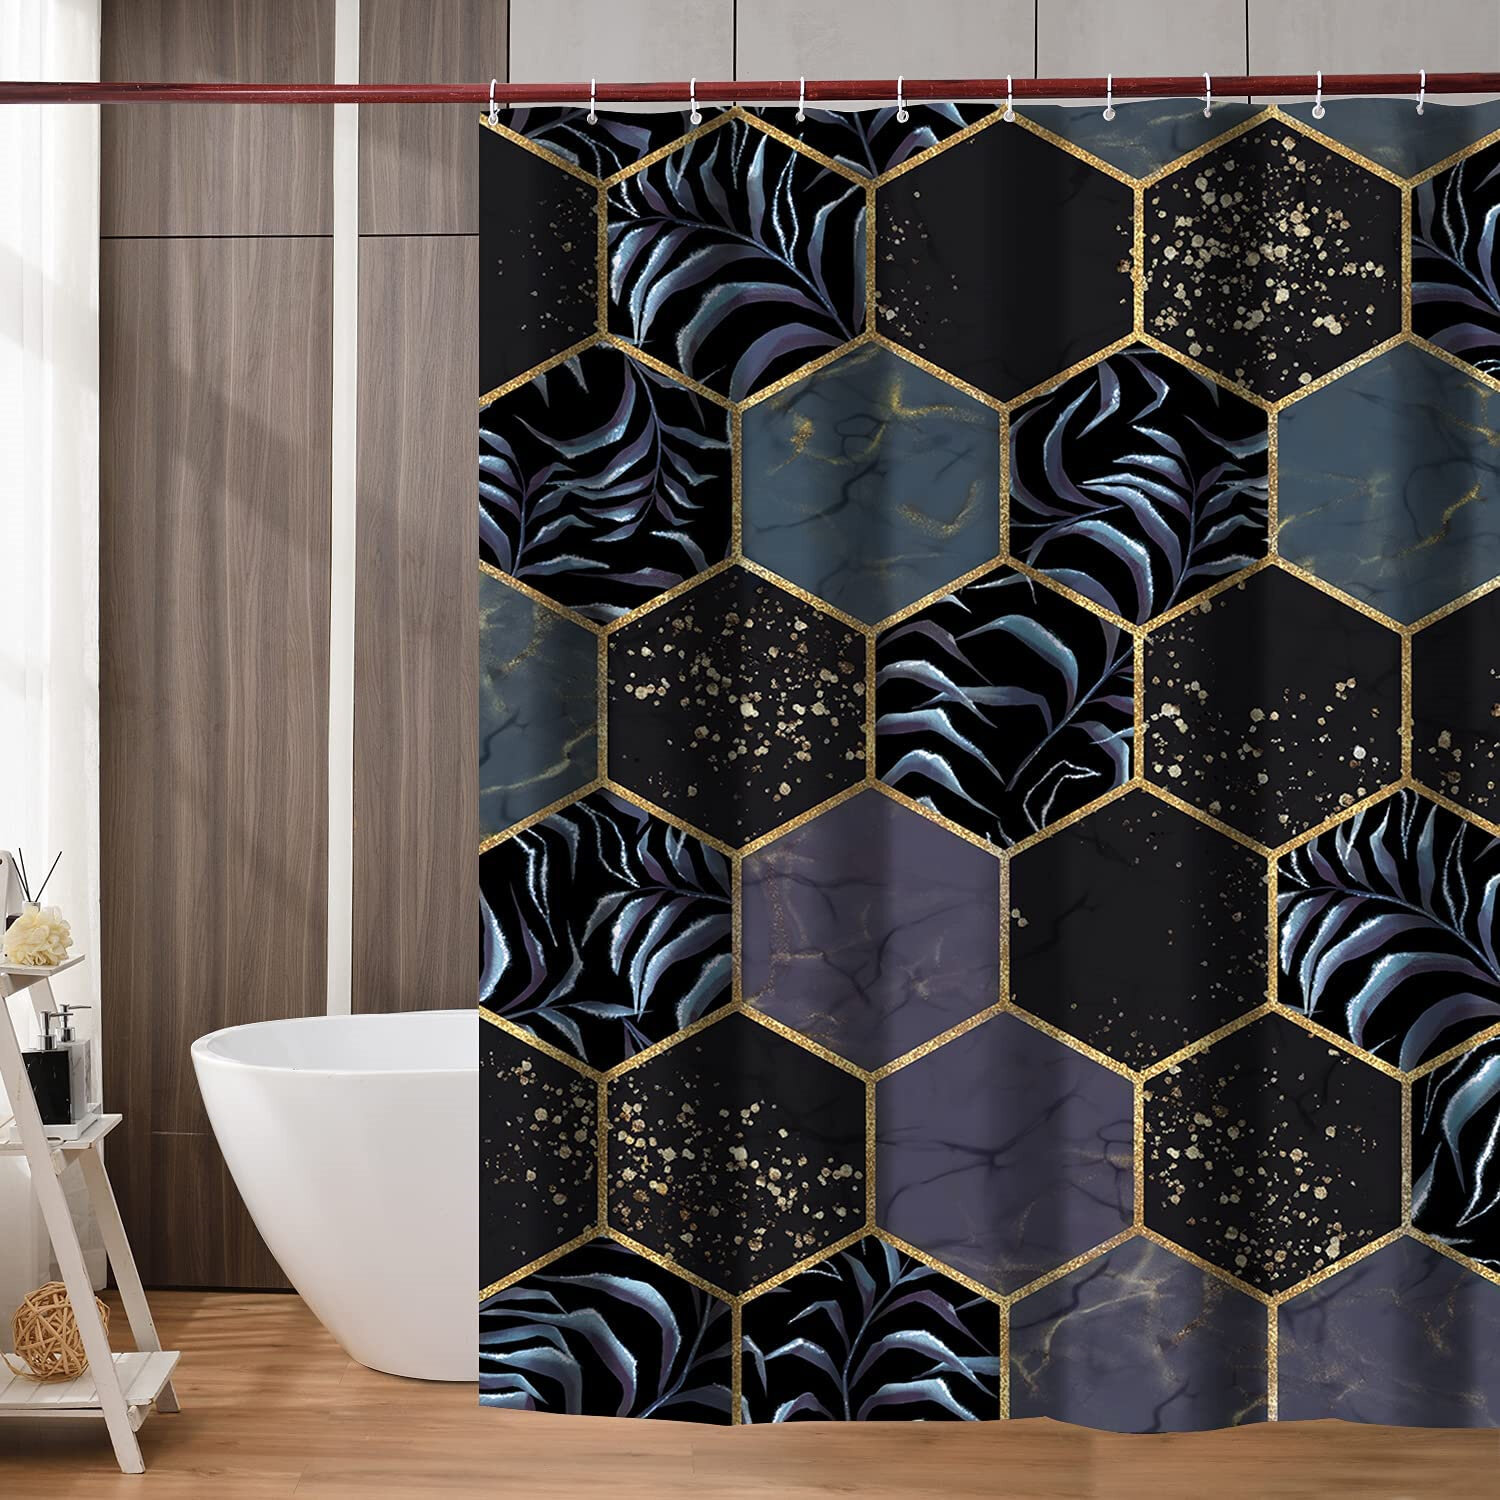 Waterproof Shower Curtain Unique Art Geometric Curtain Dormitory Bathroom Cover 